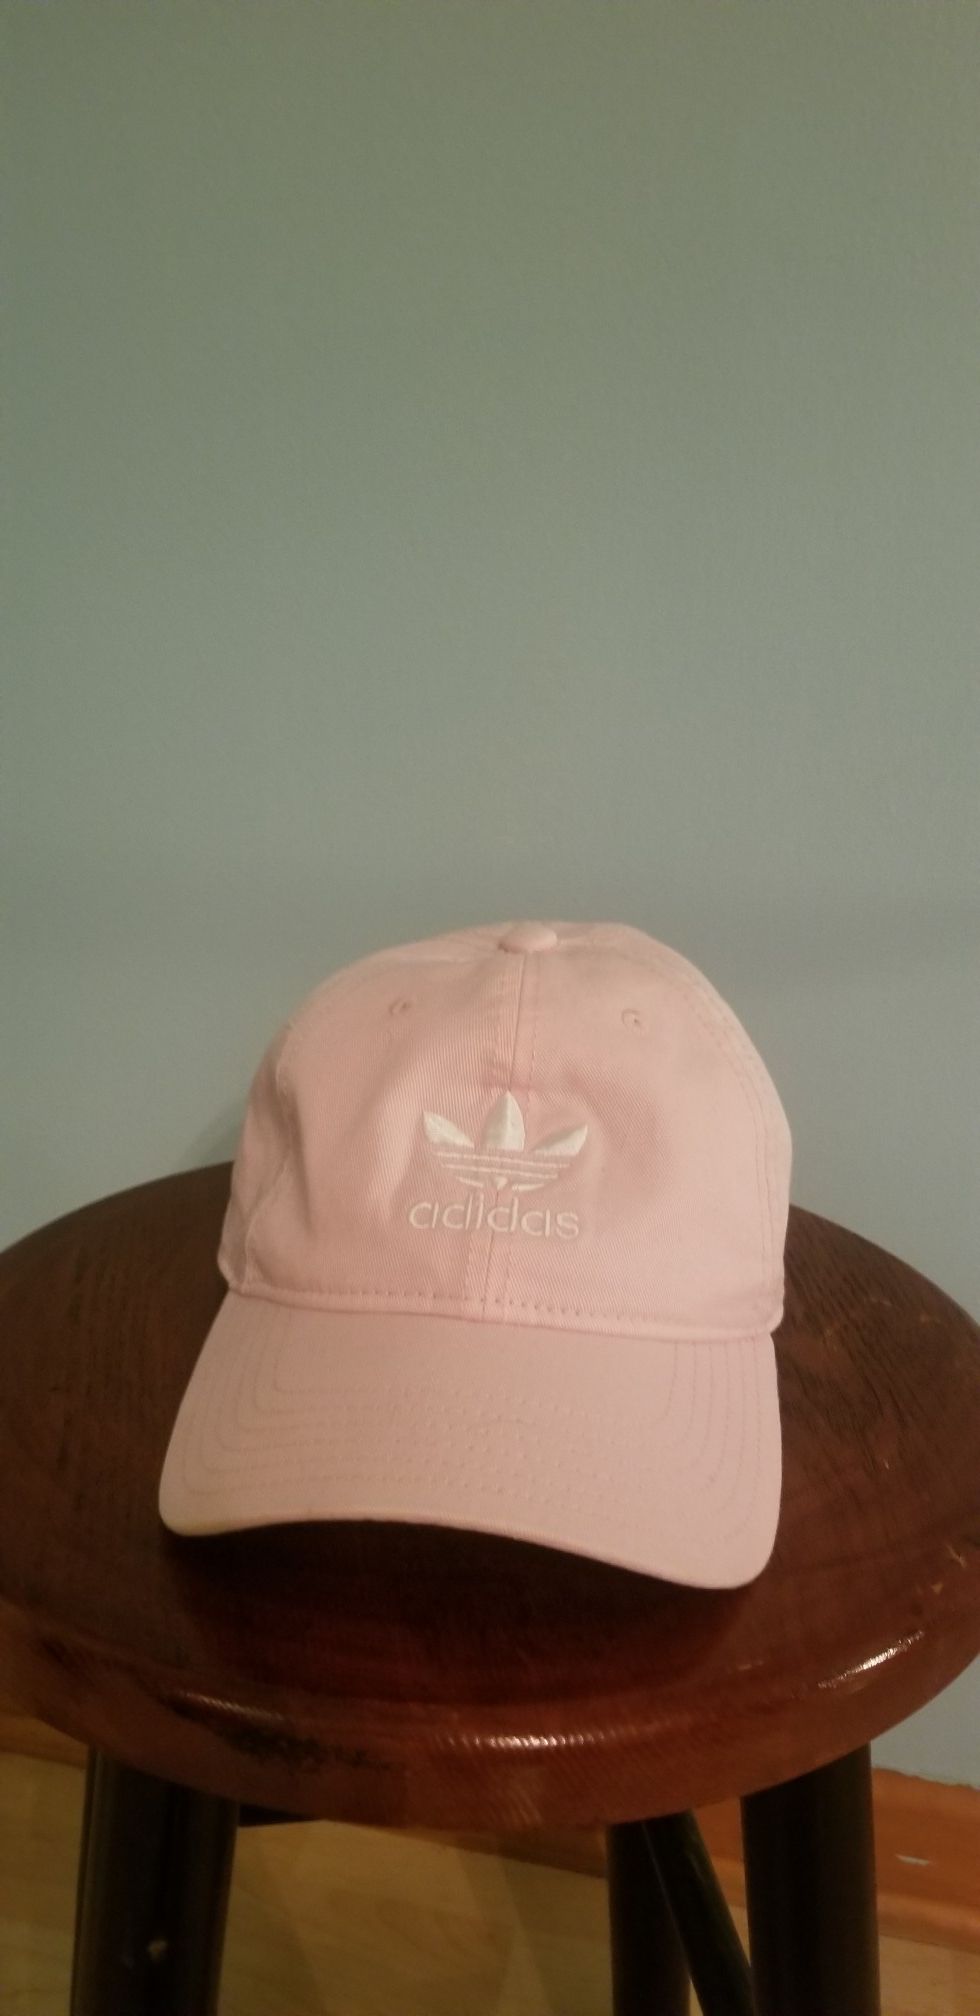 Adidas pink hat